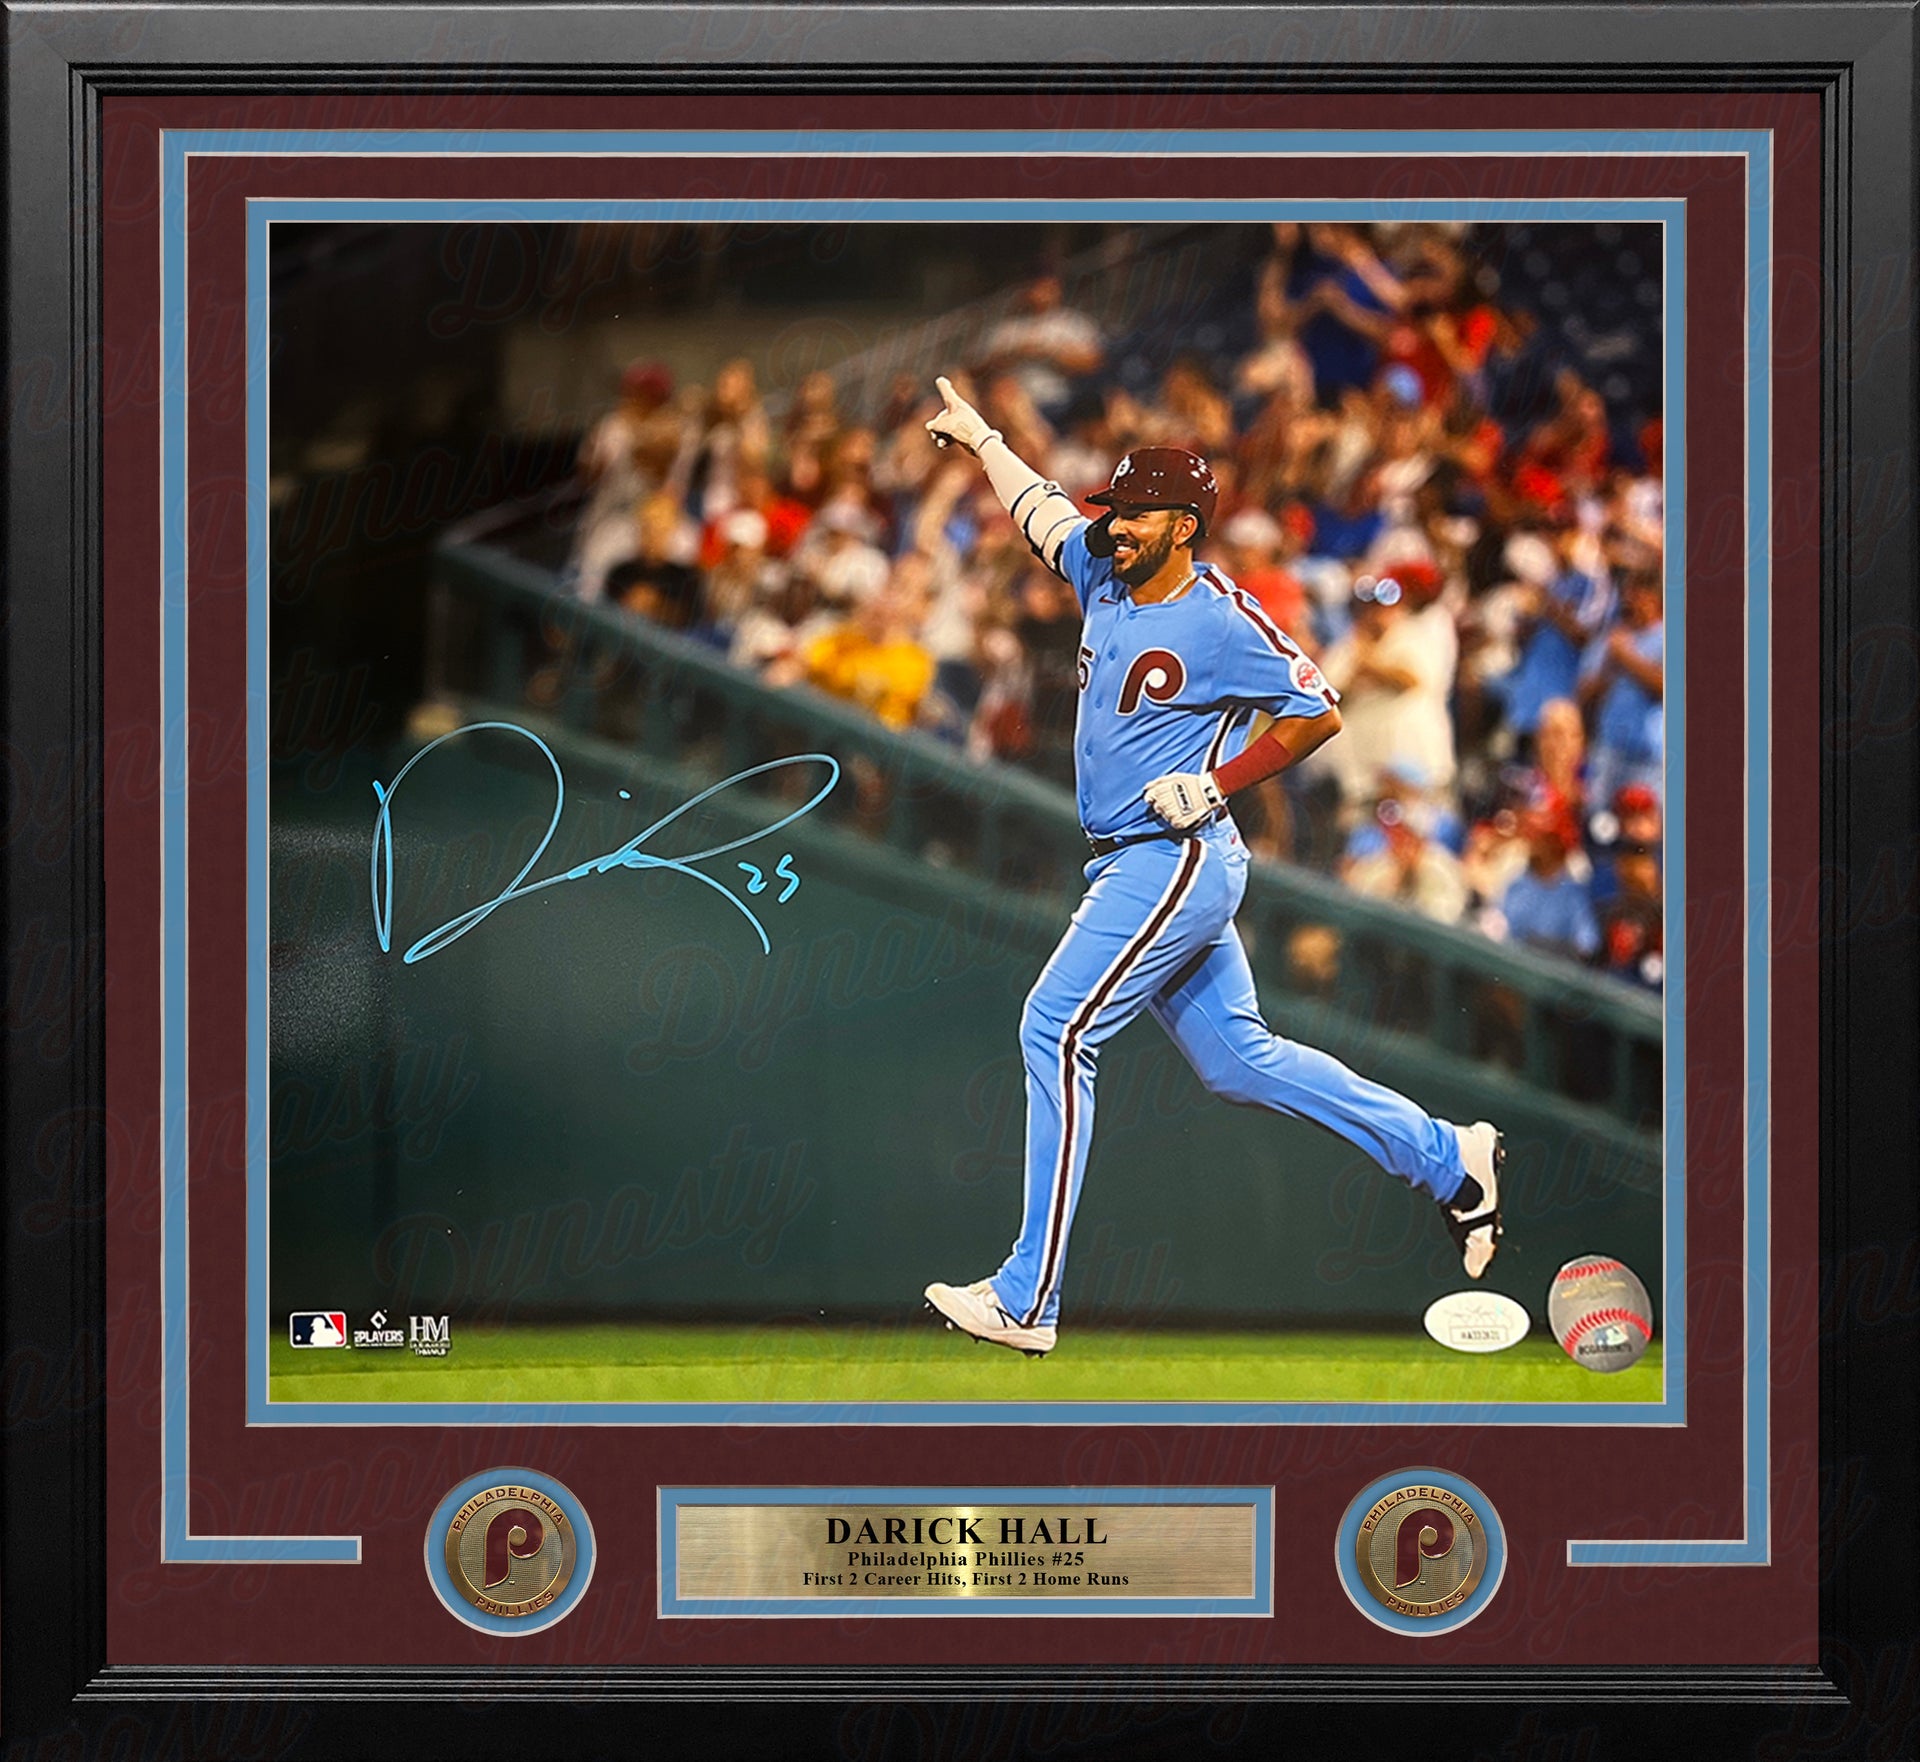 Darick Hall Runs The Bases Philadelphia Phillies Autographed Framed Baseball Photo - Dynasty Sports & Framing 